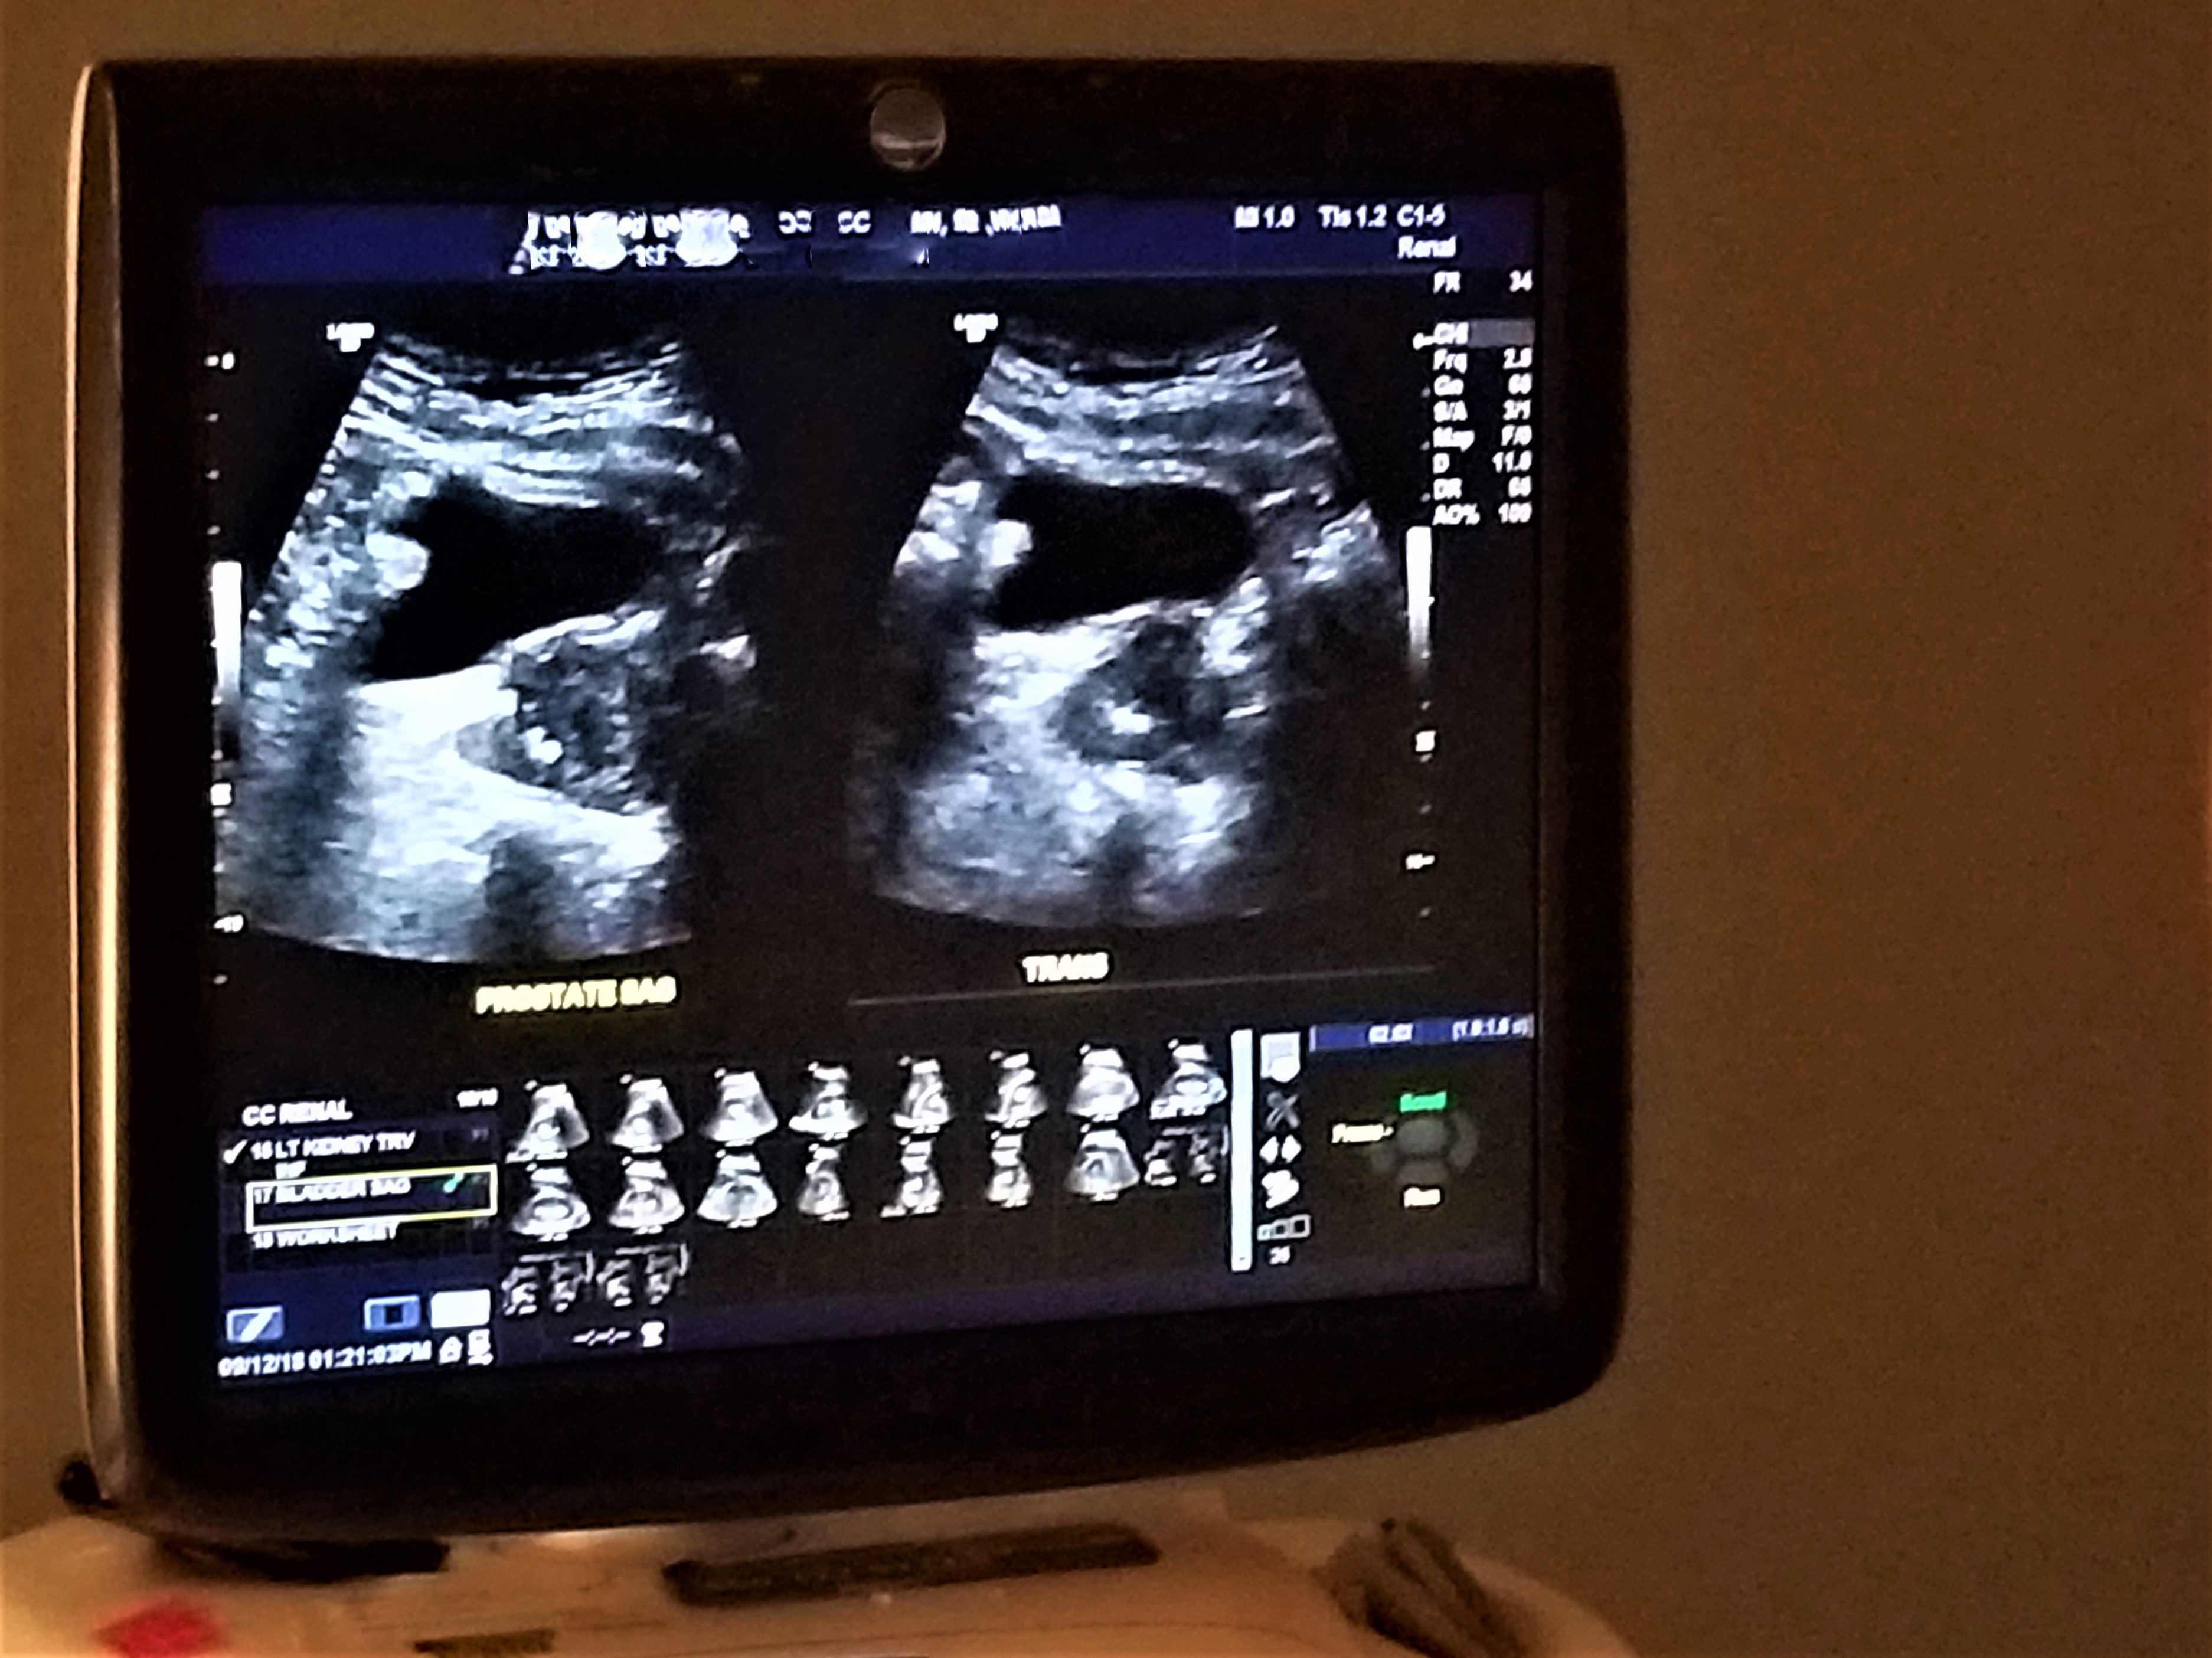 Ultrasound image of kidneys